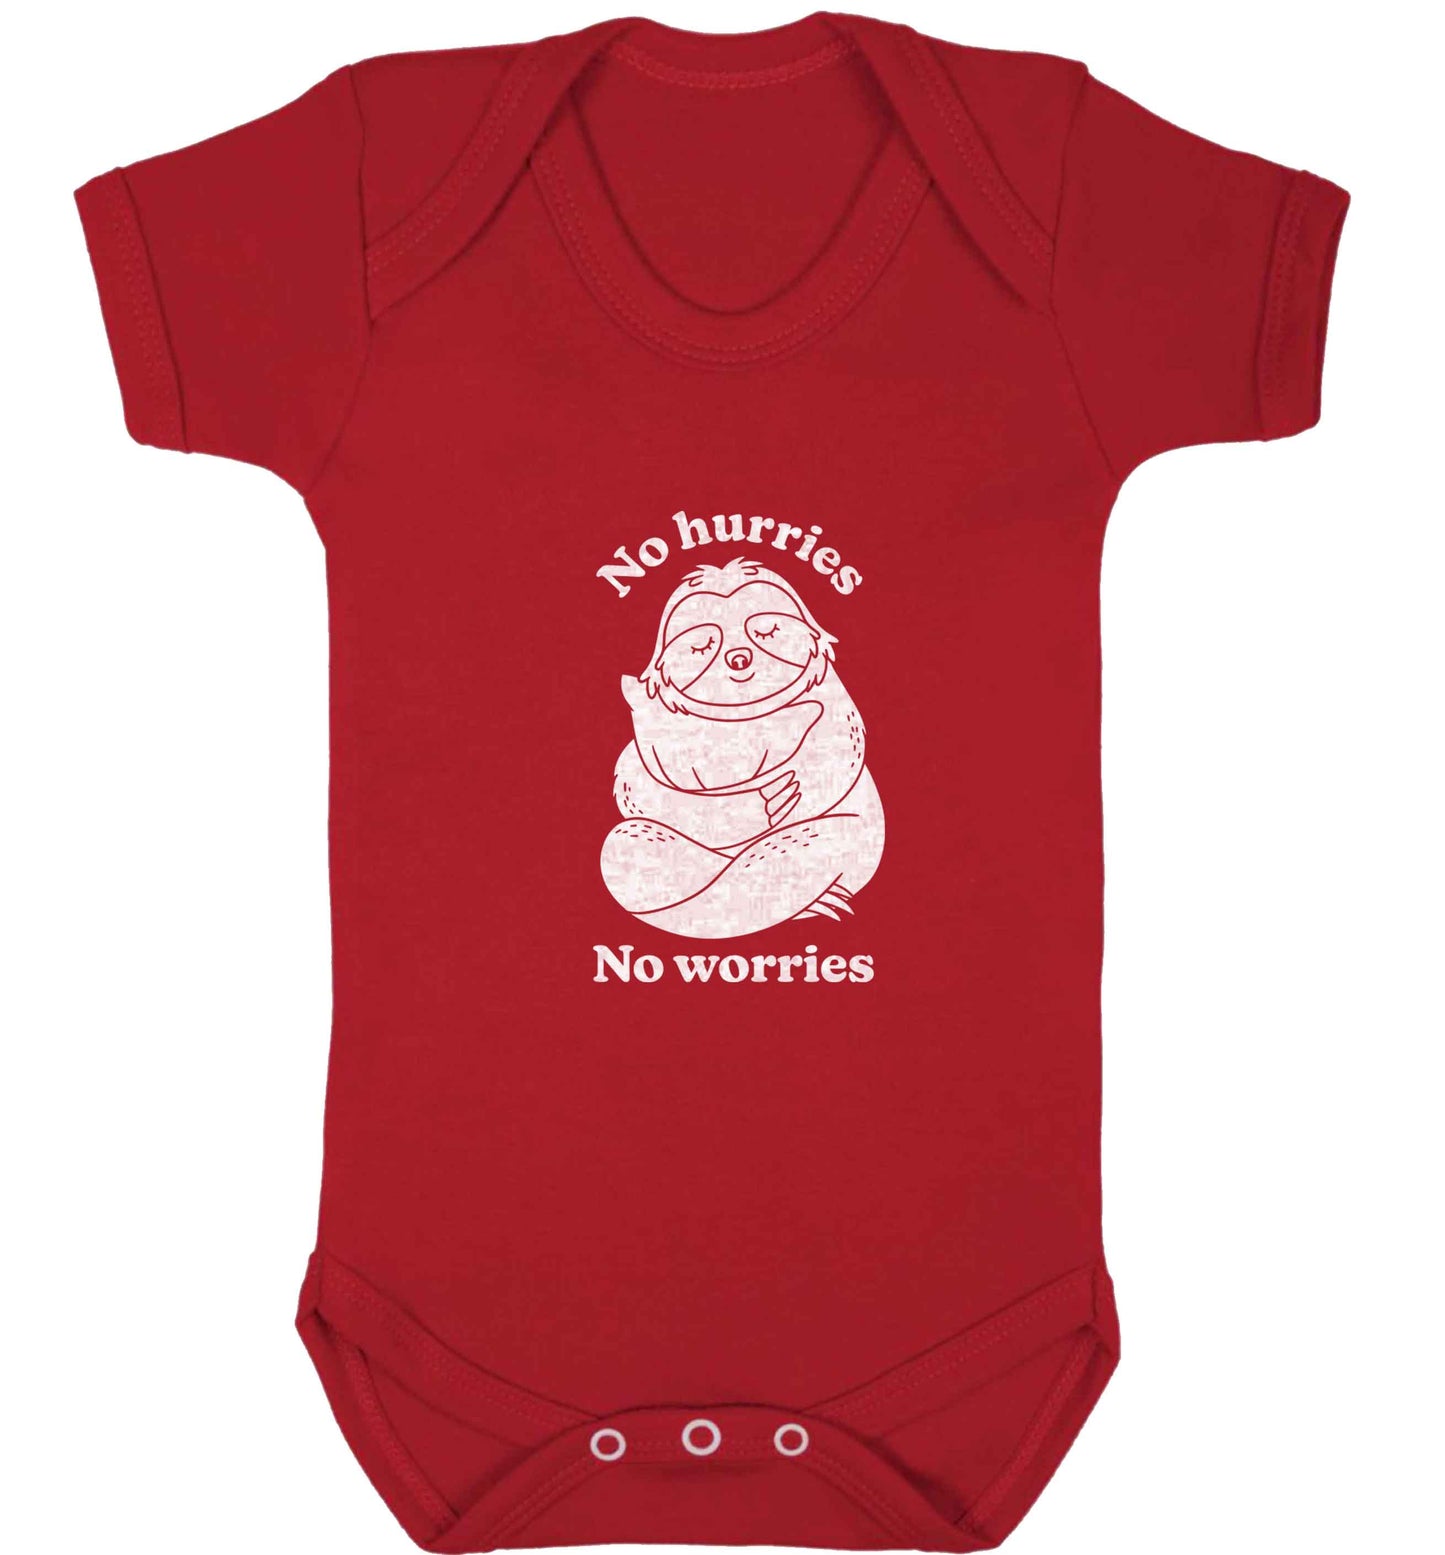 No hurries no worries baby vest red 18-24 months